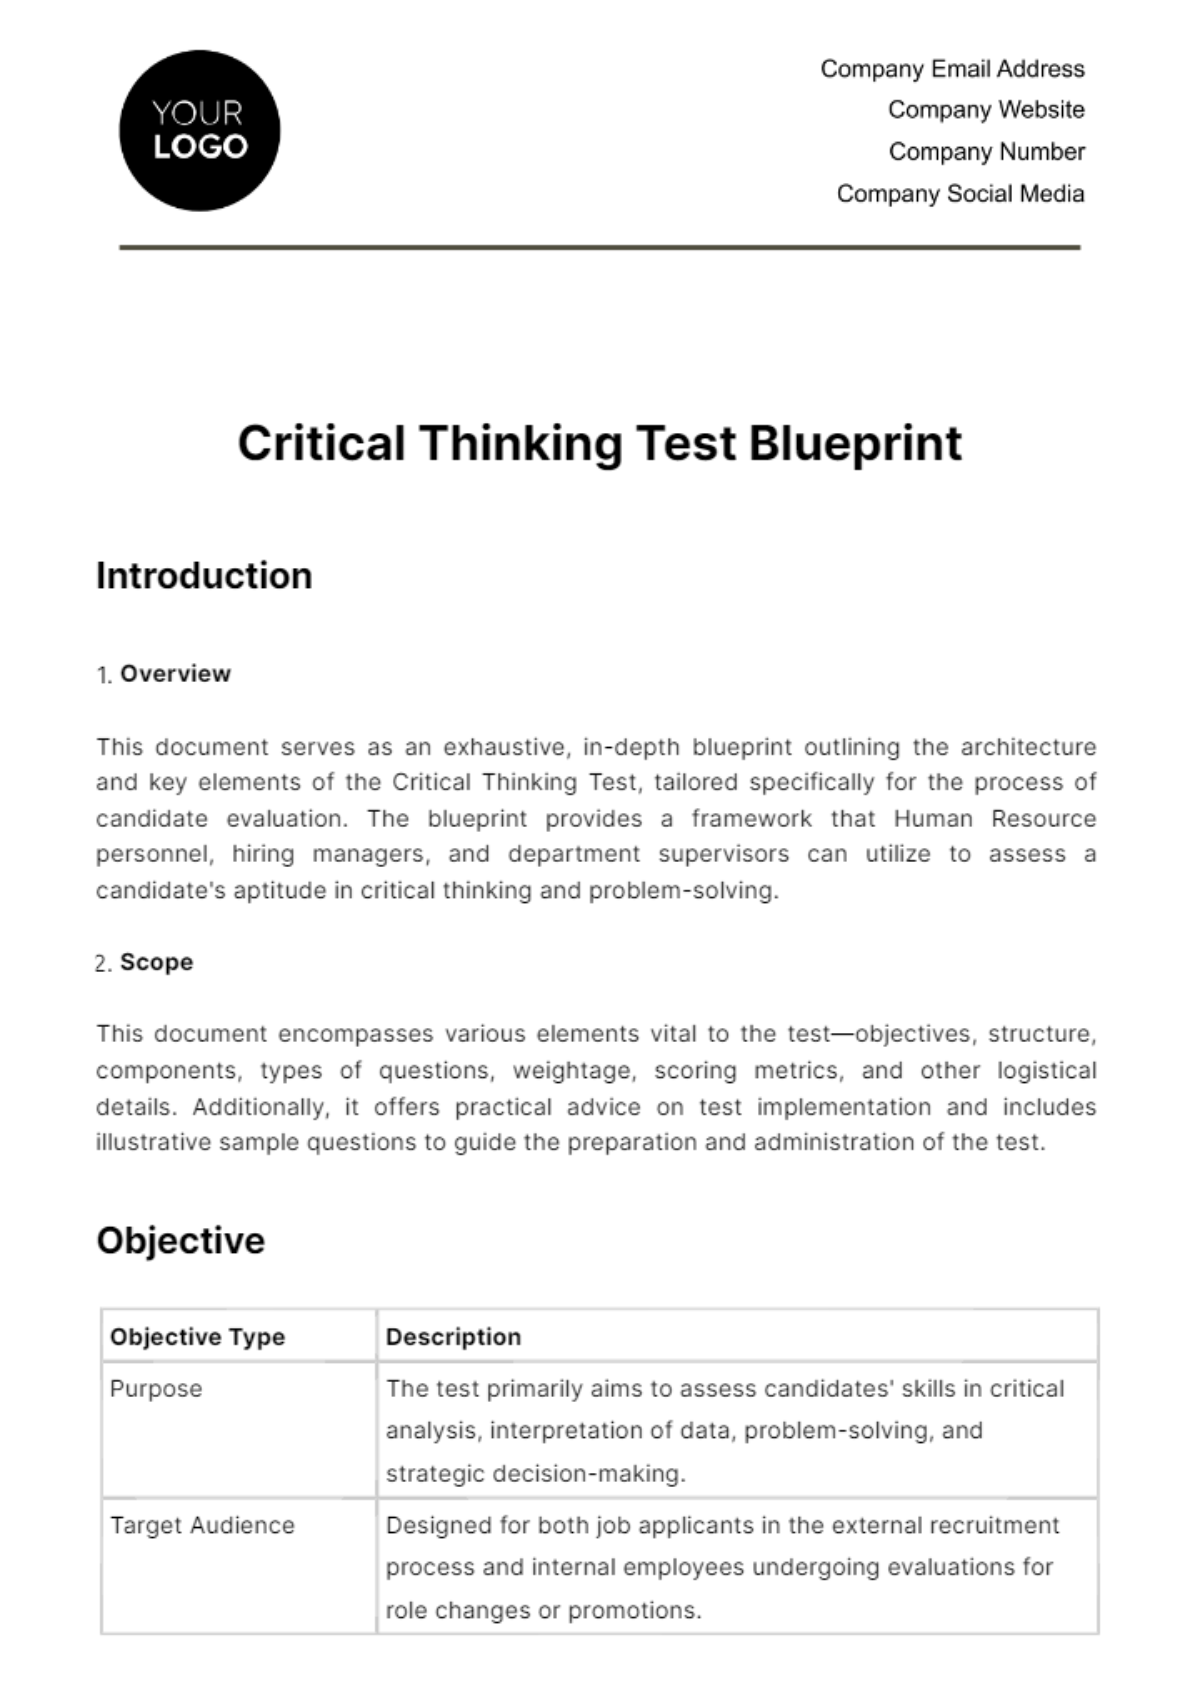 Critical Thinking Test Blueprint HR Template